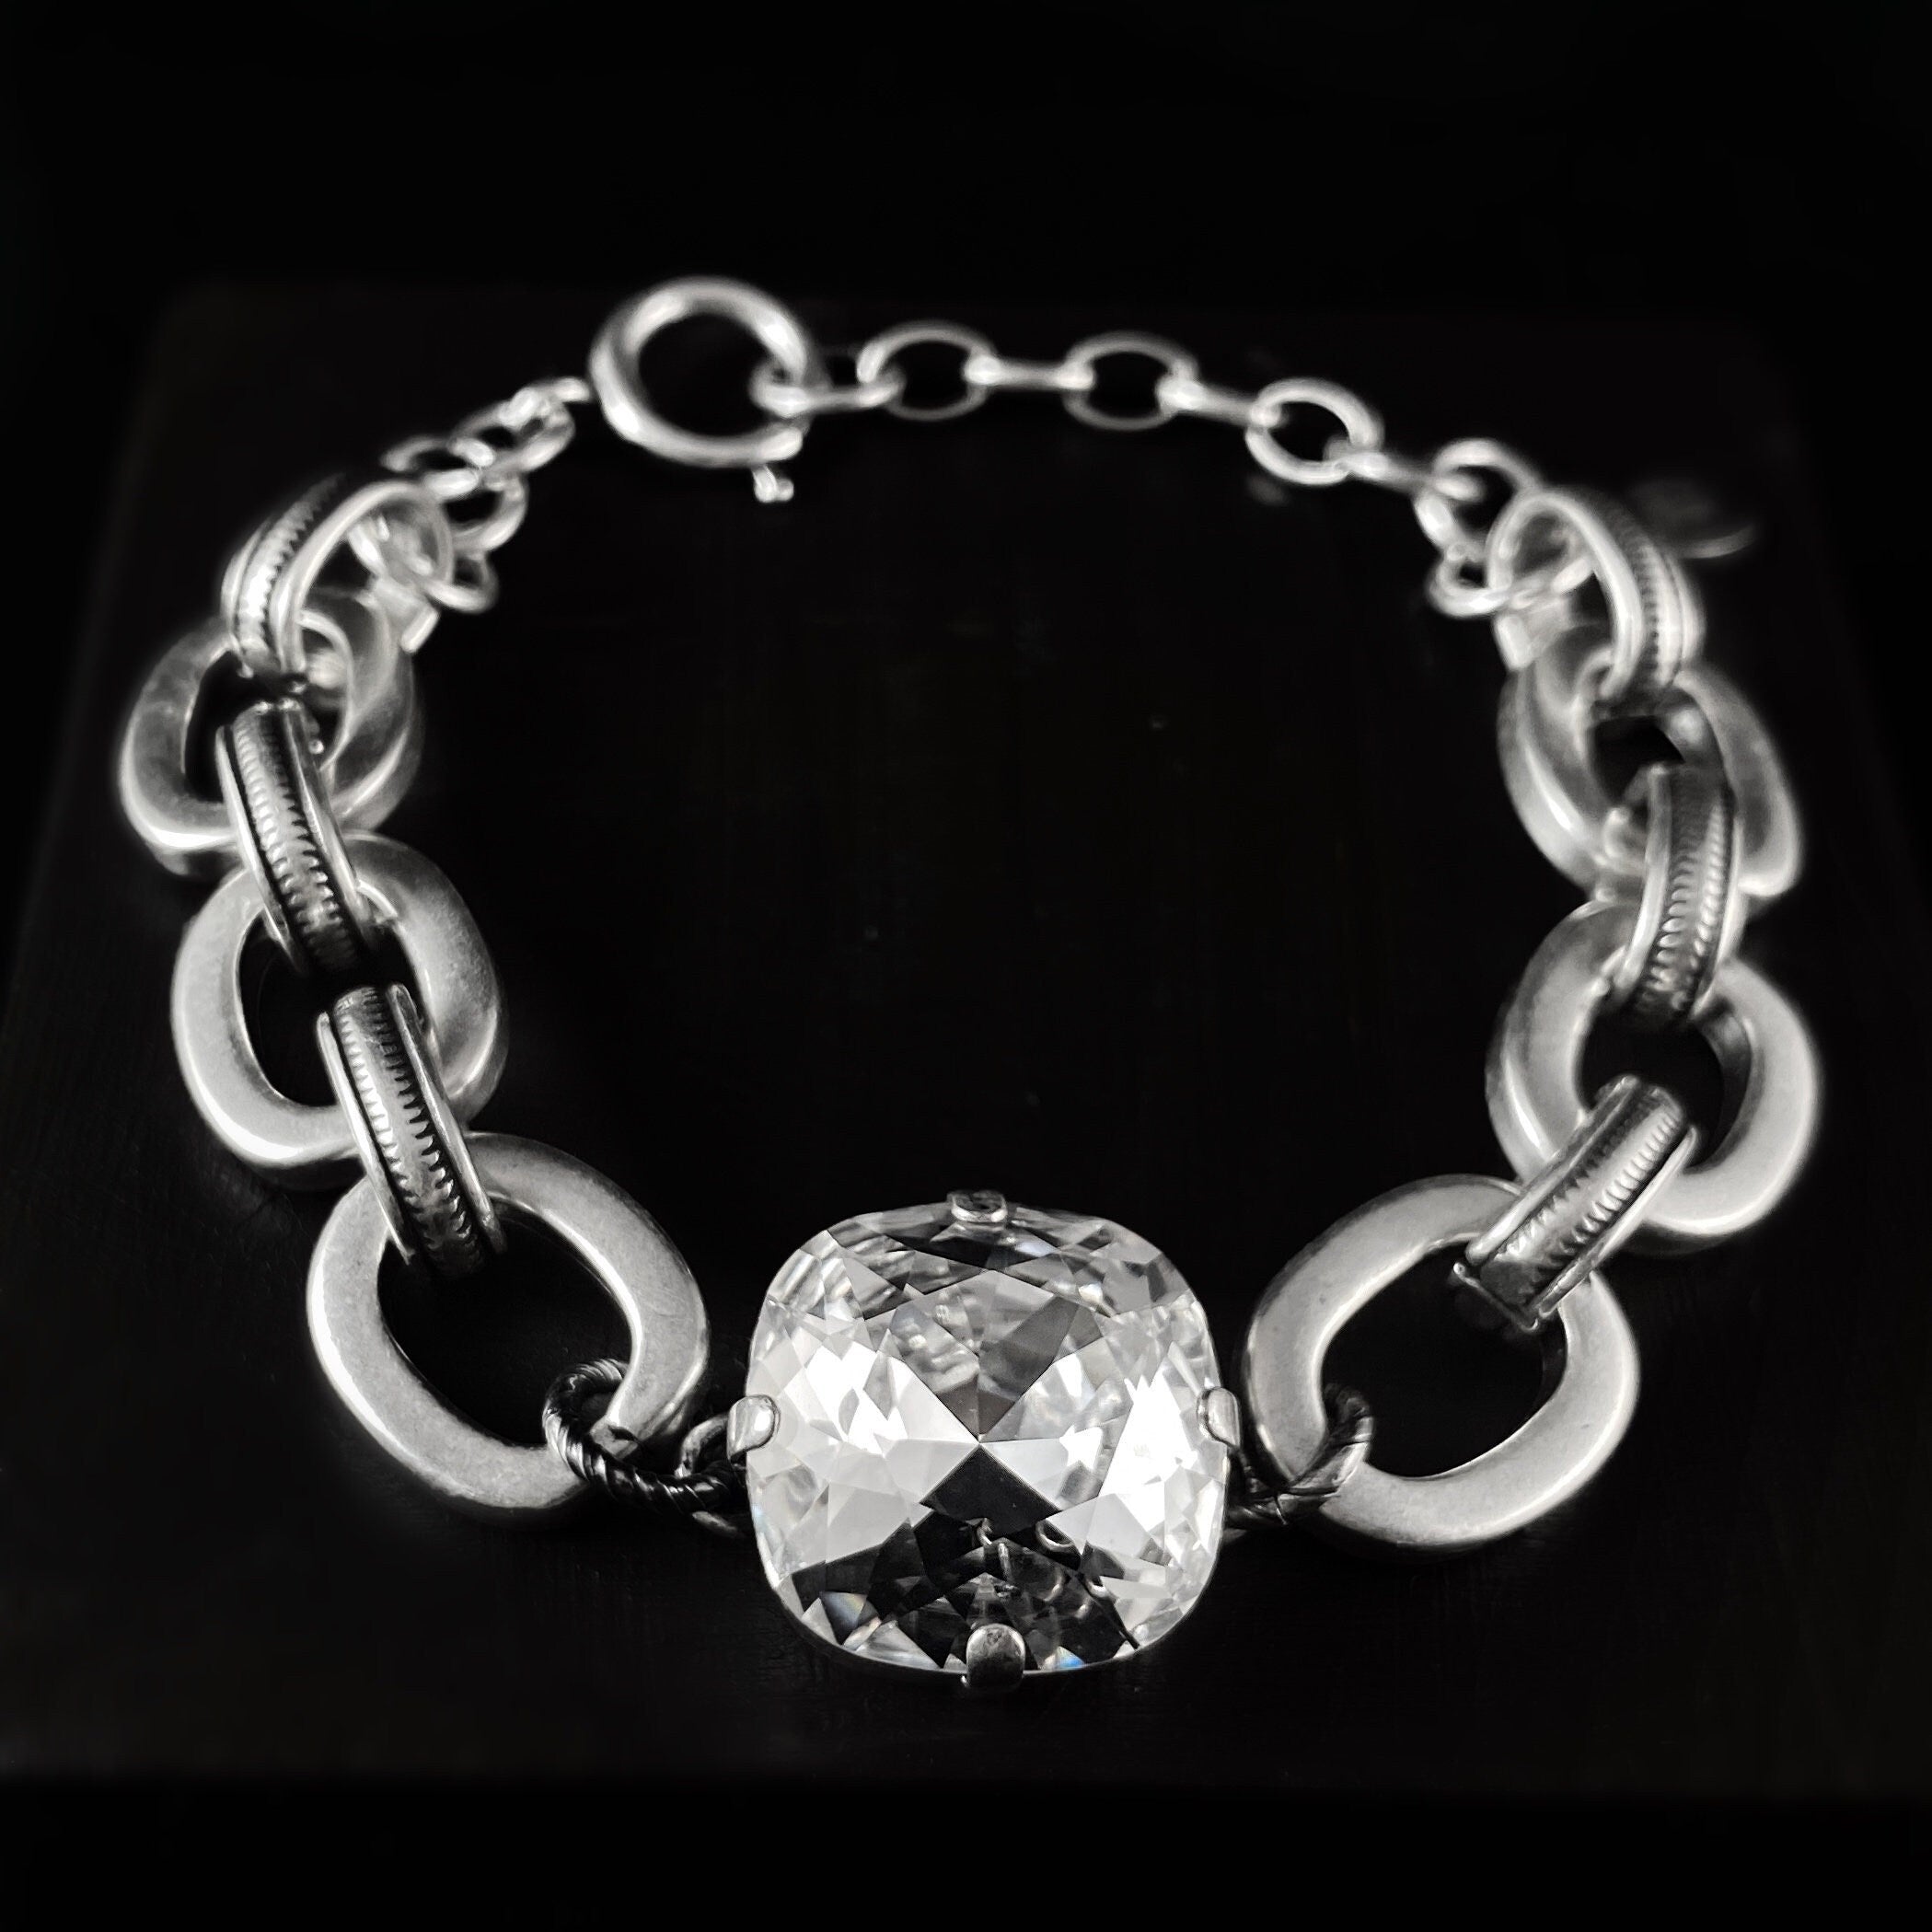 Swarovski Aurora Borealis Crystals On Silver Narrow Oval Shaped Chain  Bracelet | Chain bracelet, Swarovski, Aurora borealis crystal